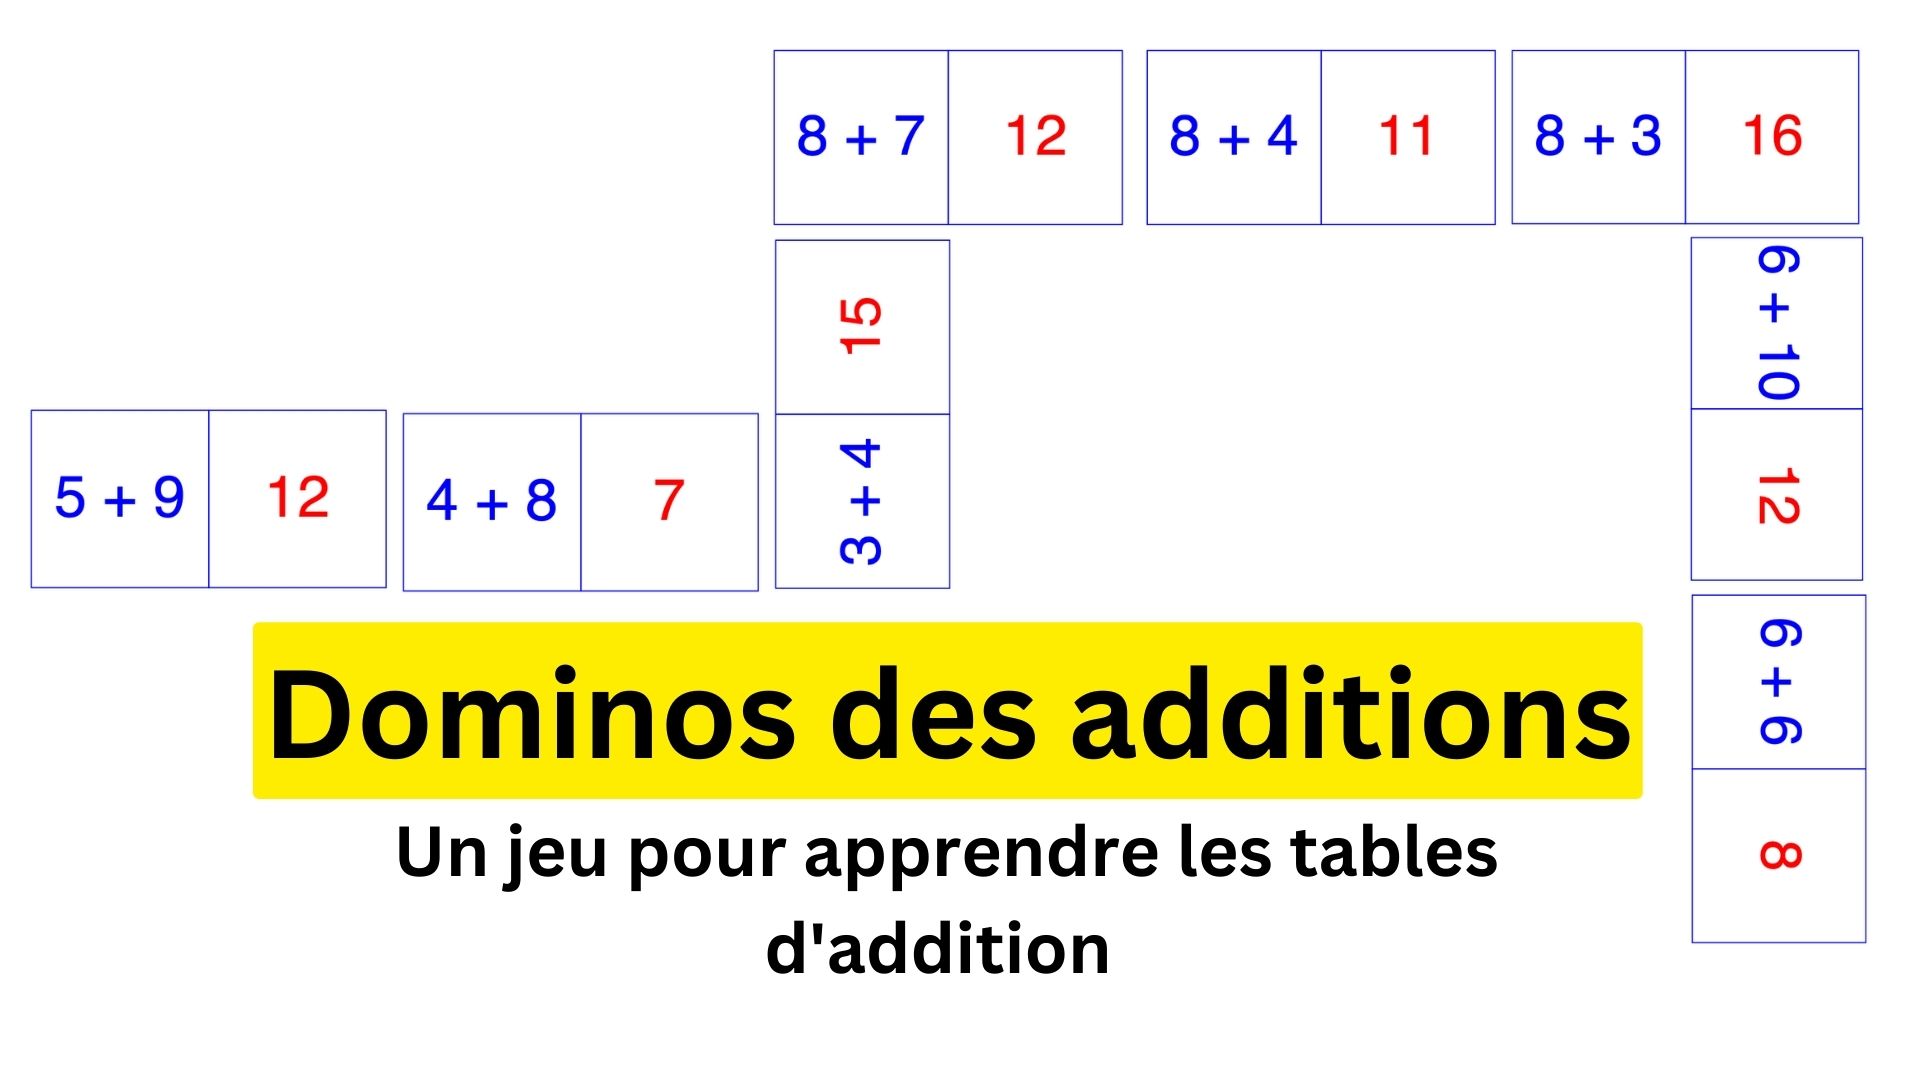 Les dominos - Règles du jeu